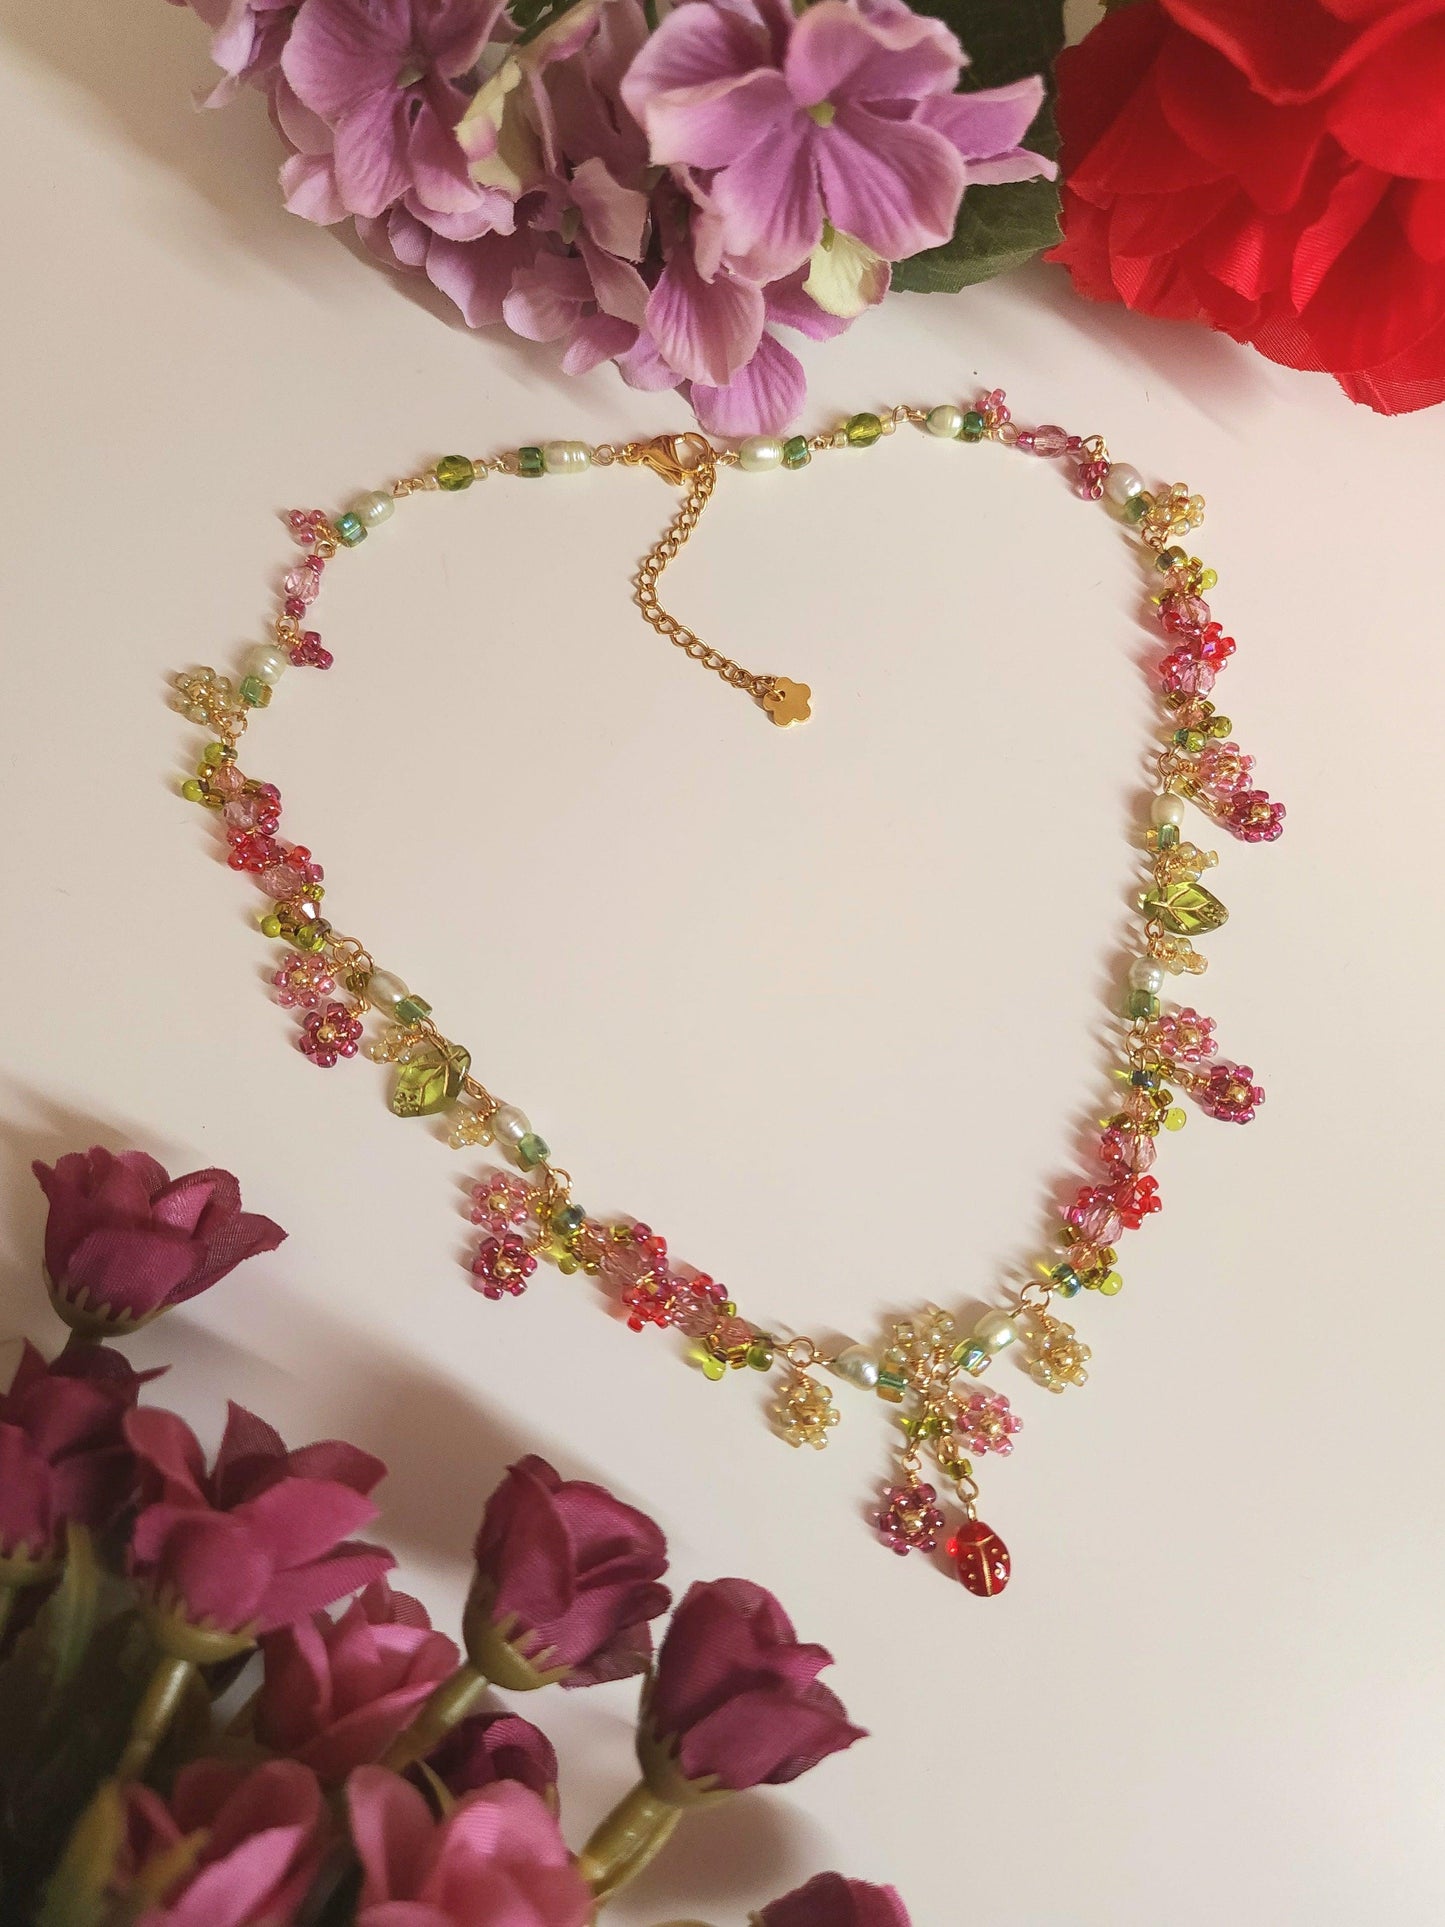 Ladybug's Garden Necklace - By Cocoyu